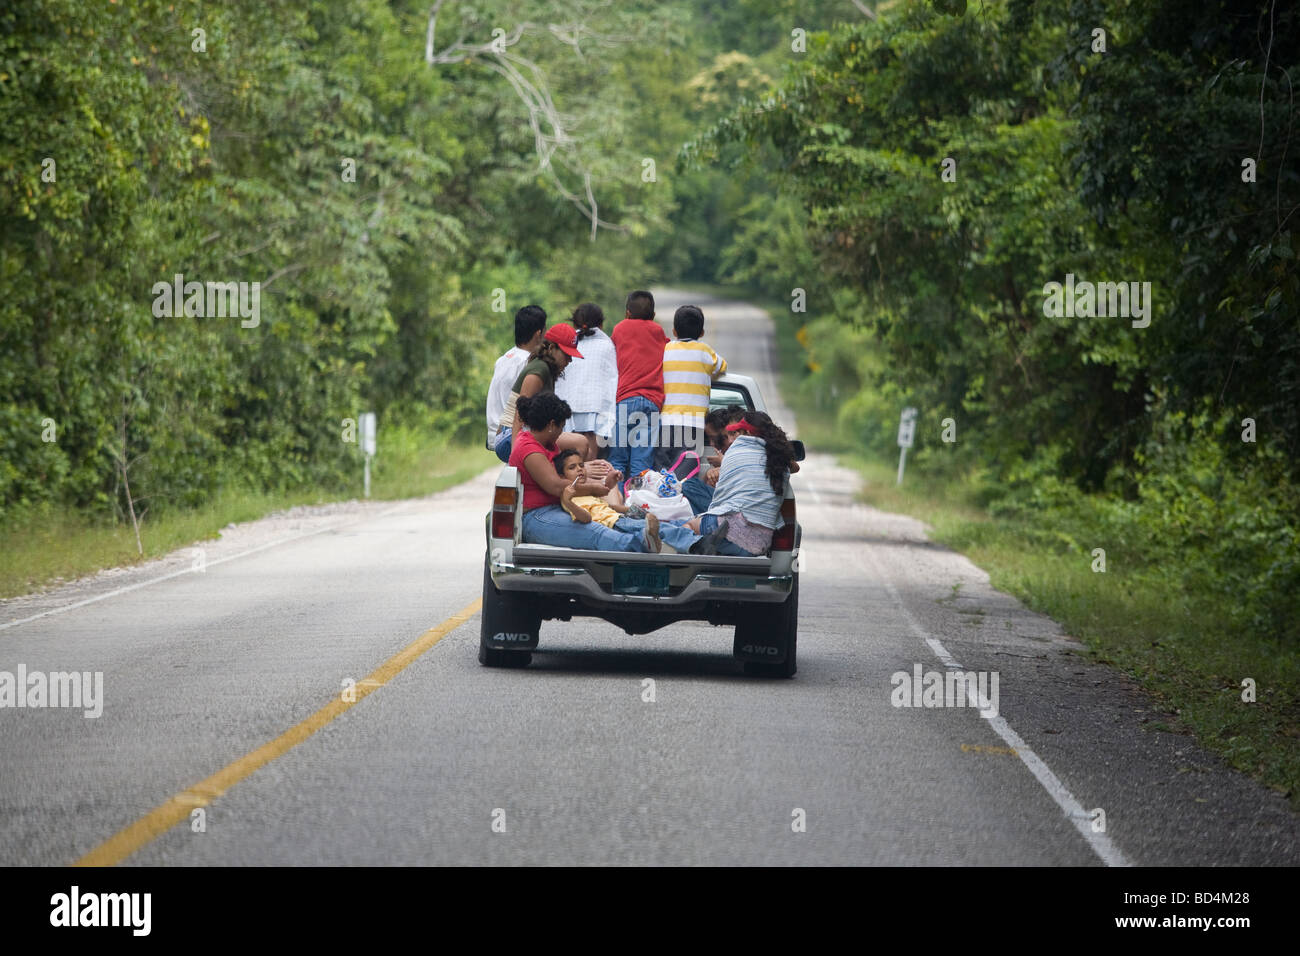 Pickup truck packed with passengers, Guatemala Stock Photo - Alamy